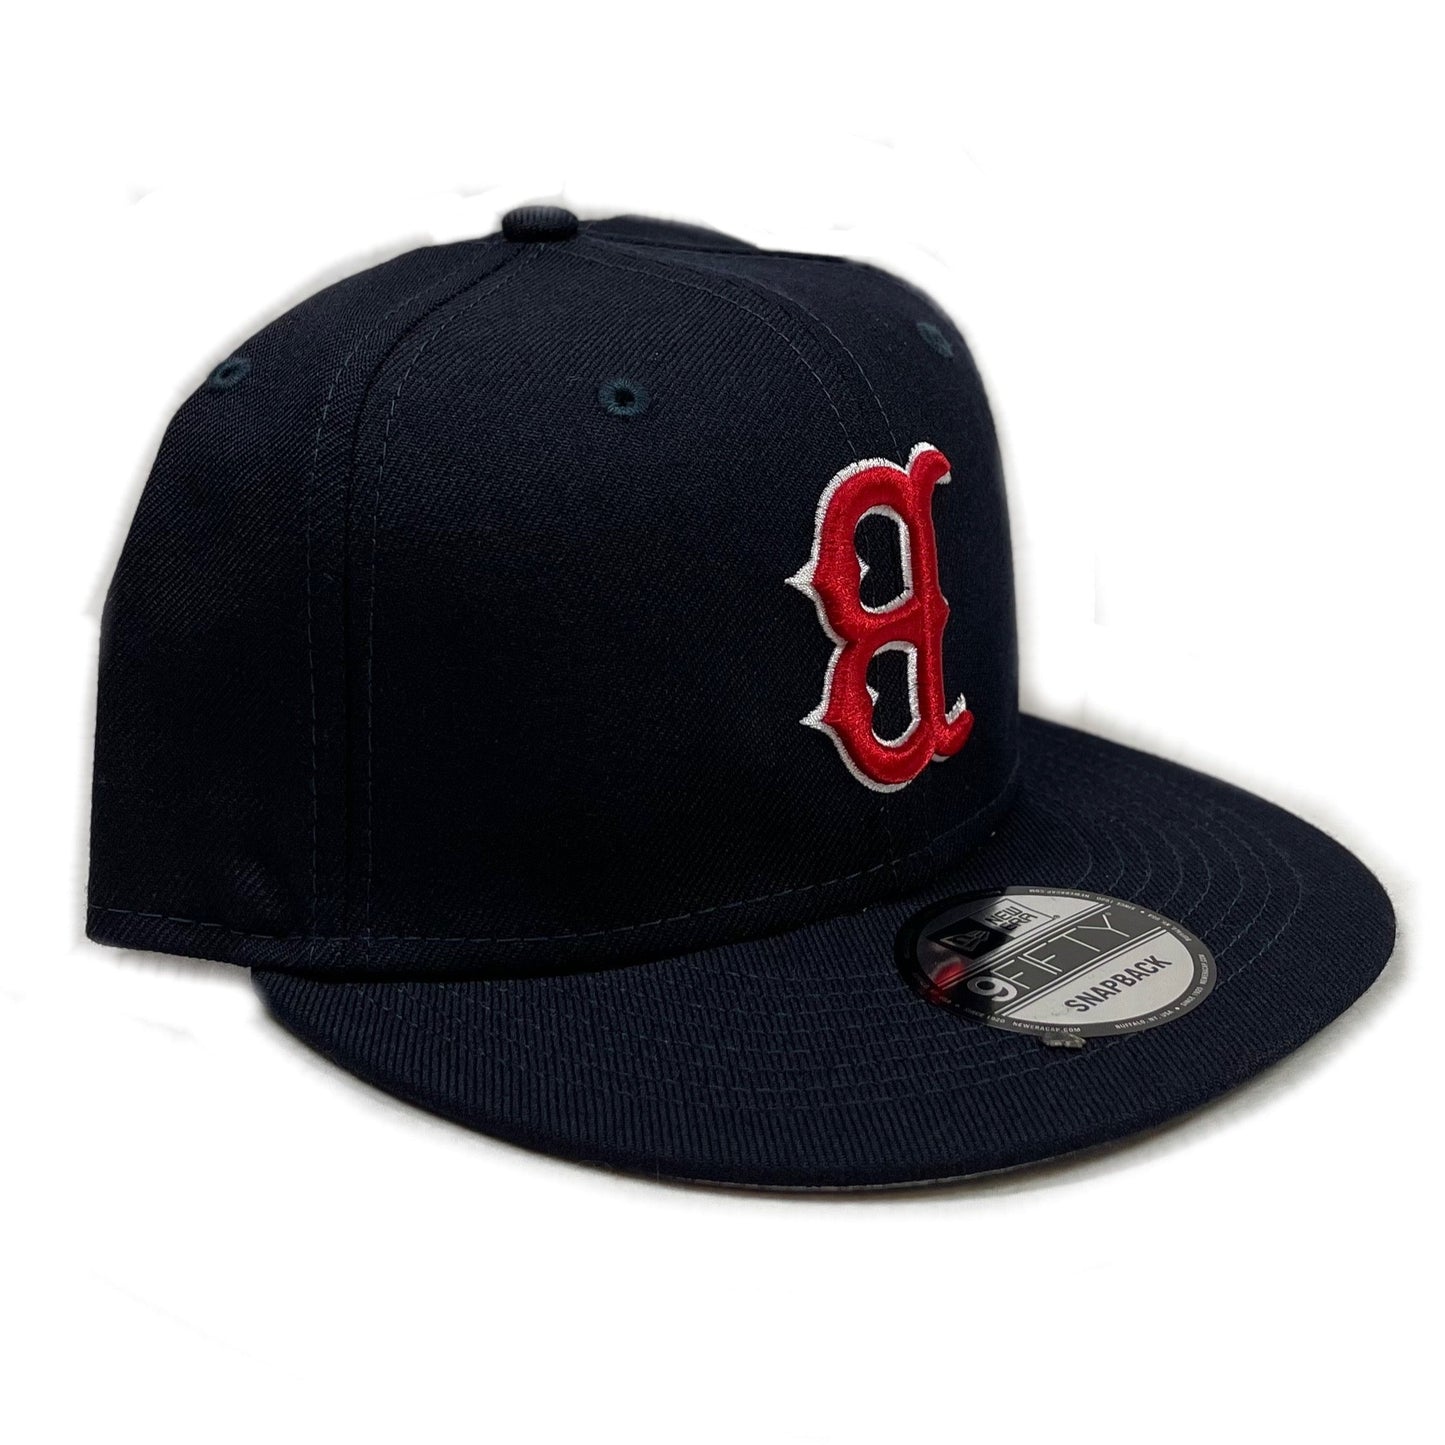 Boston Red Sox Upside Down Logo (Black) Snapback